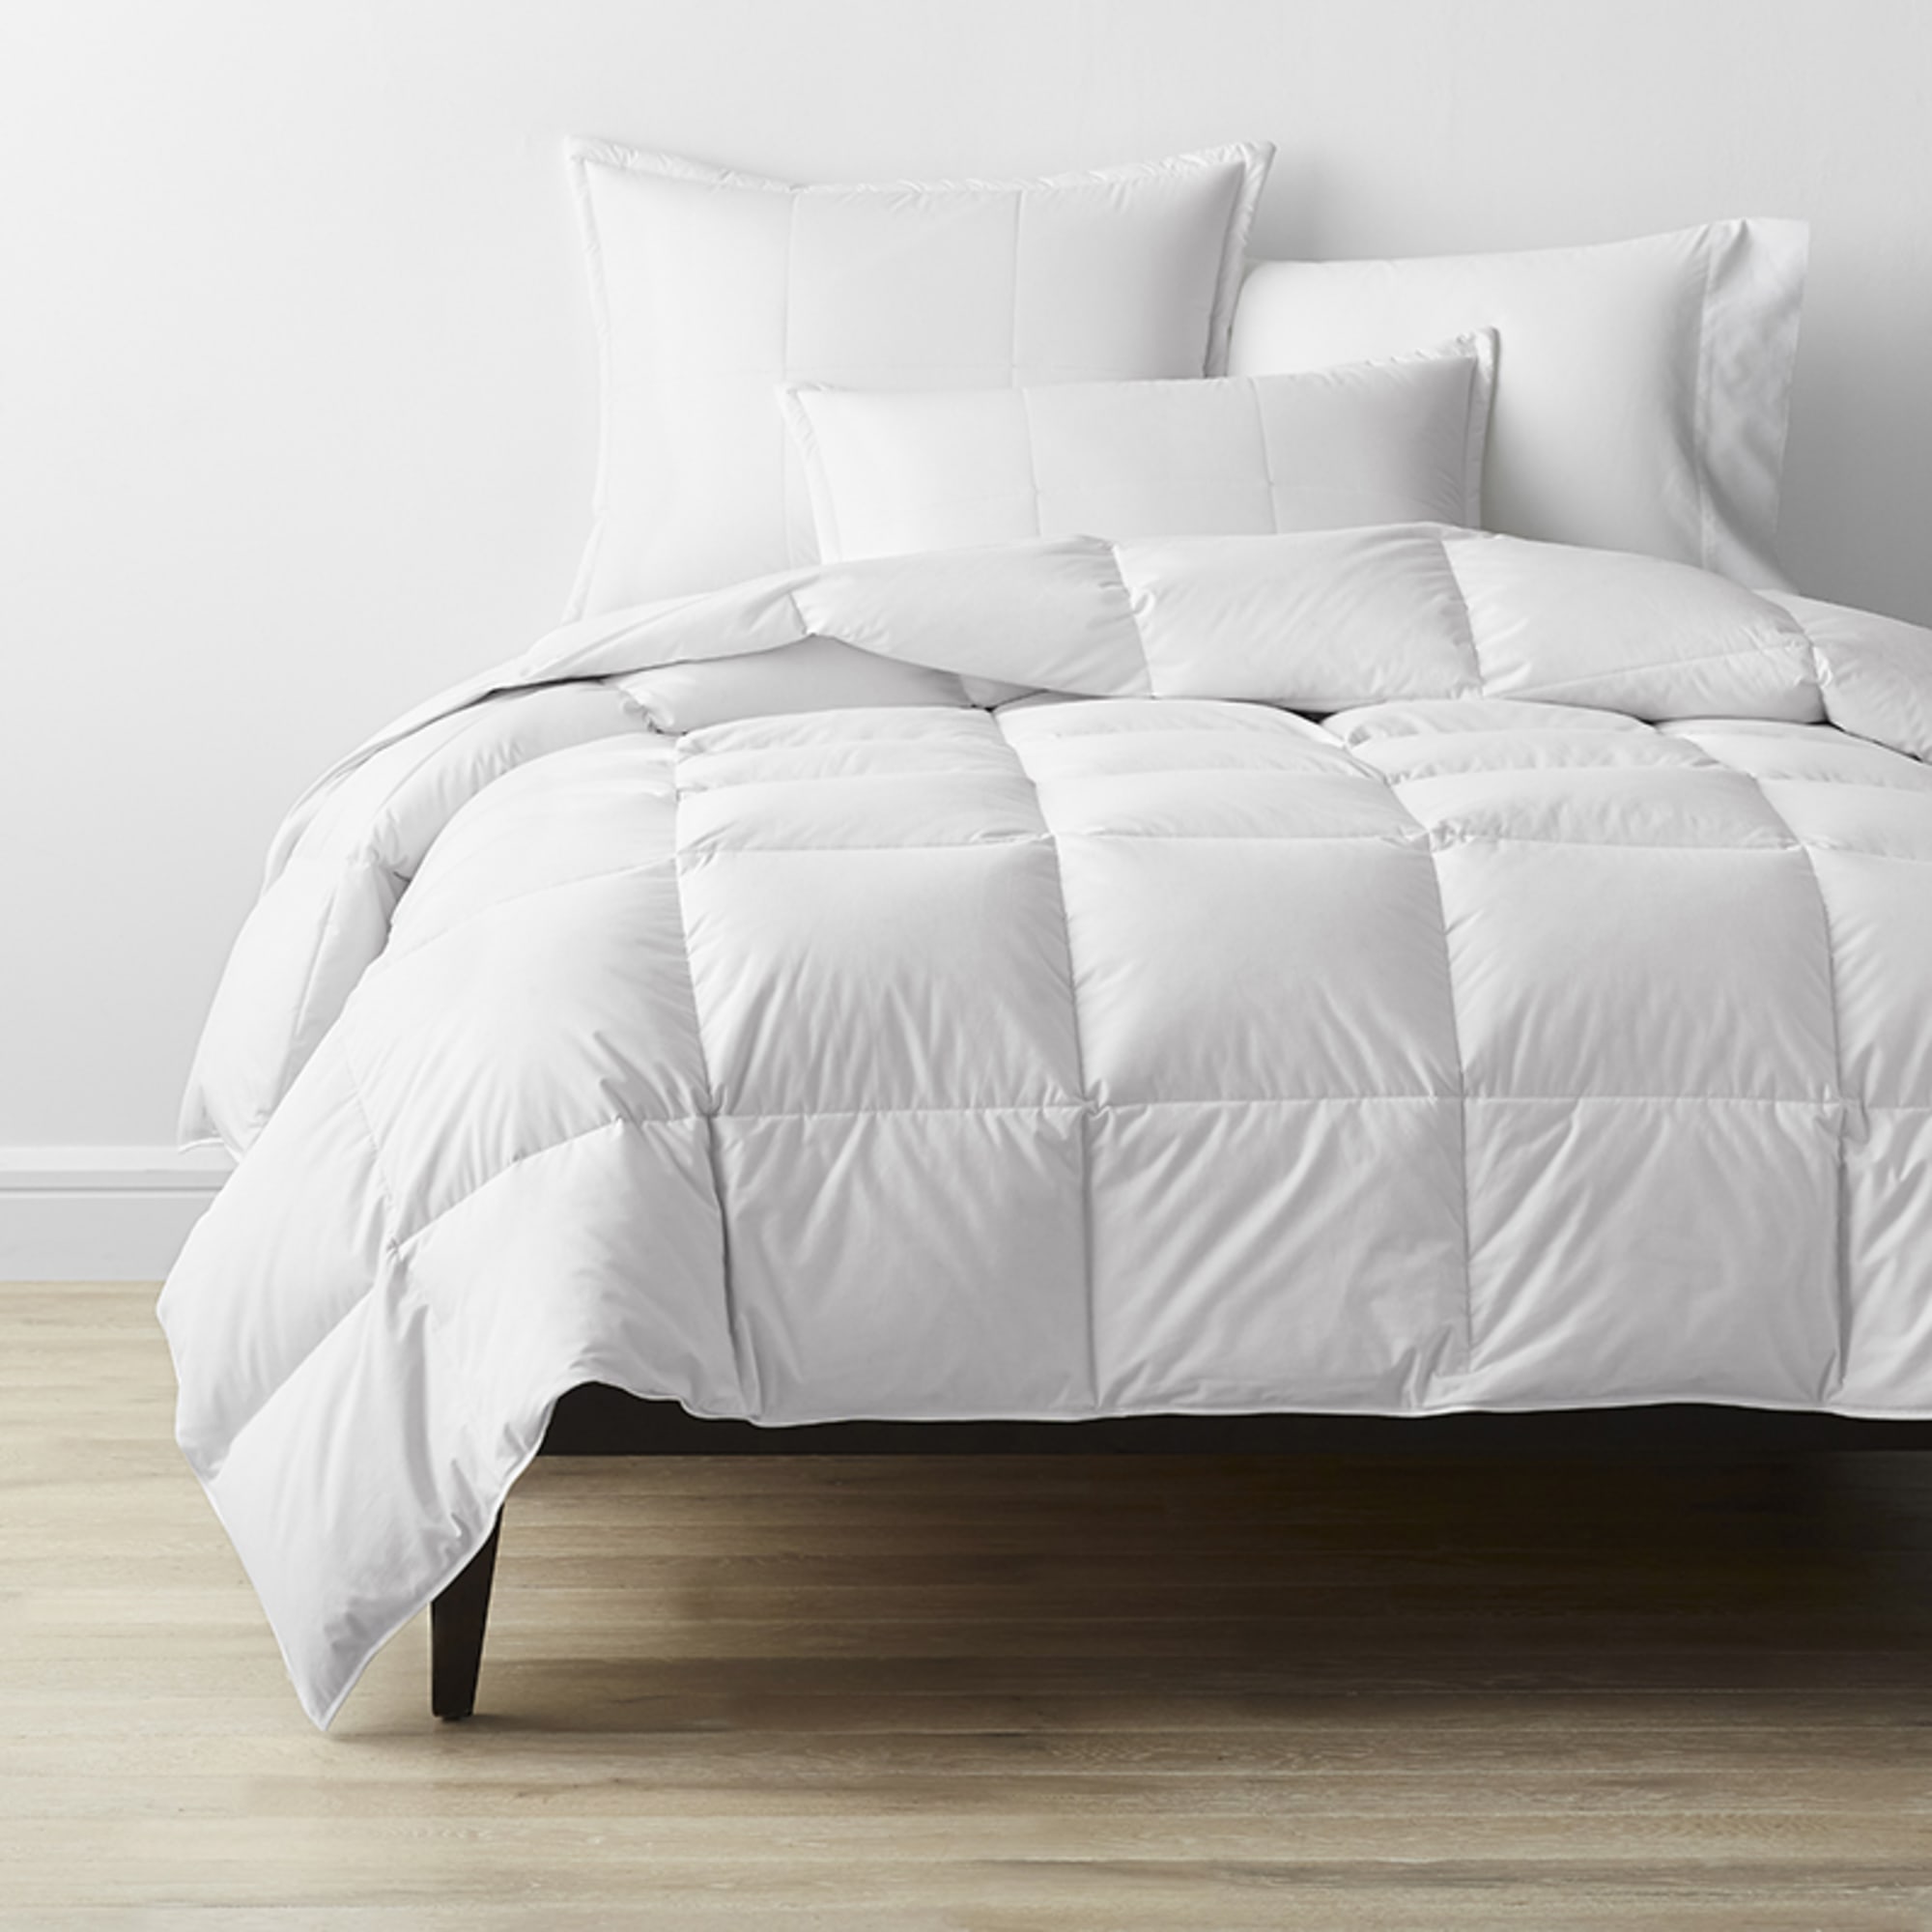 Premium Down Ultra Warmth Comforter - White, King | The Company Store